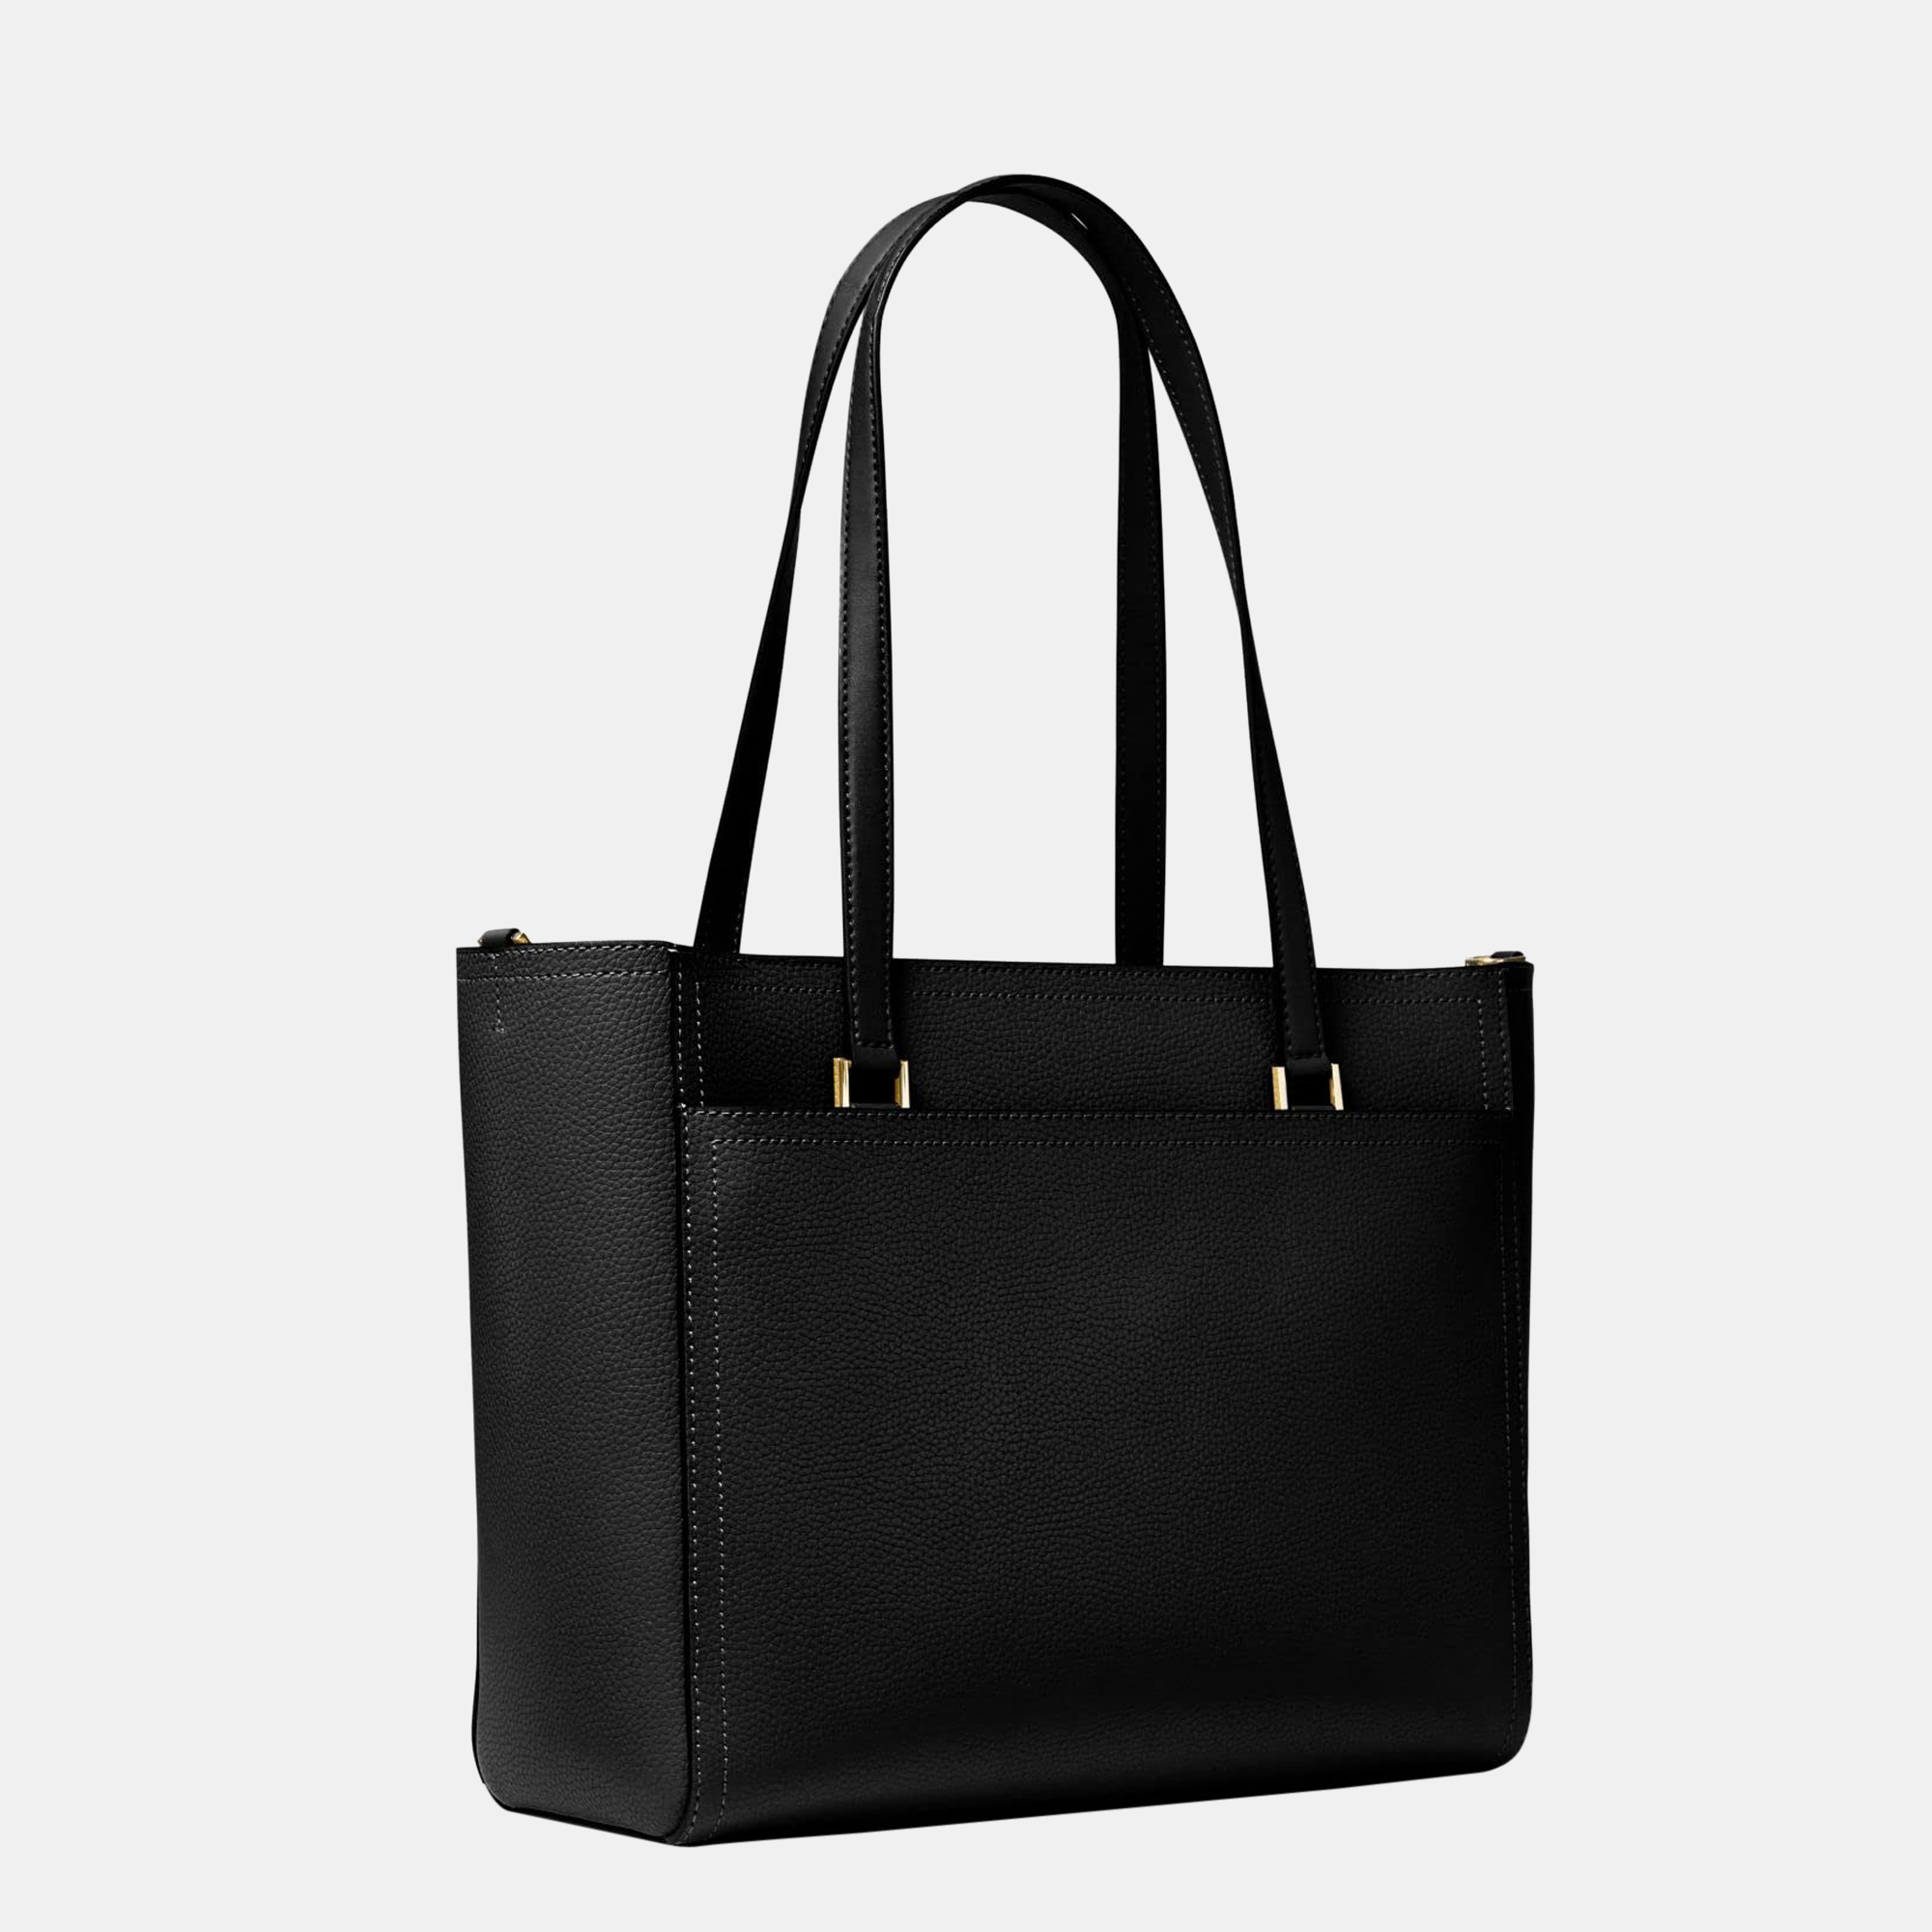 Michael Kors Black - Leather - Tote Bag